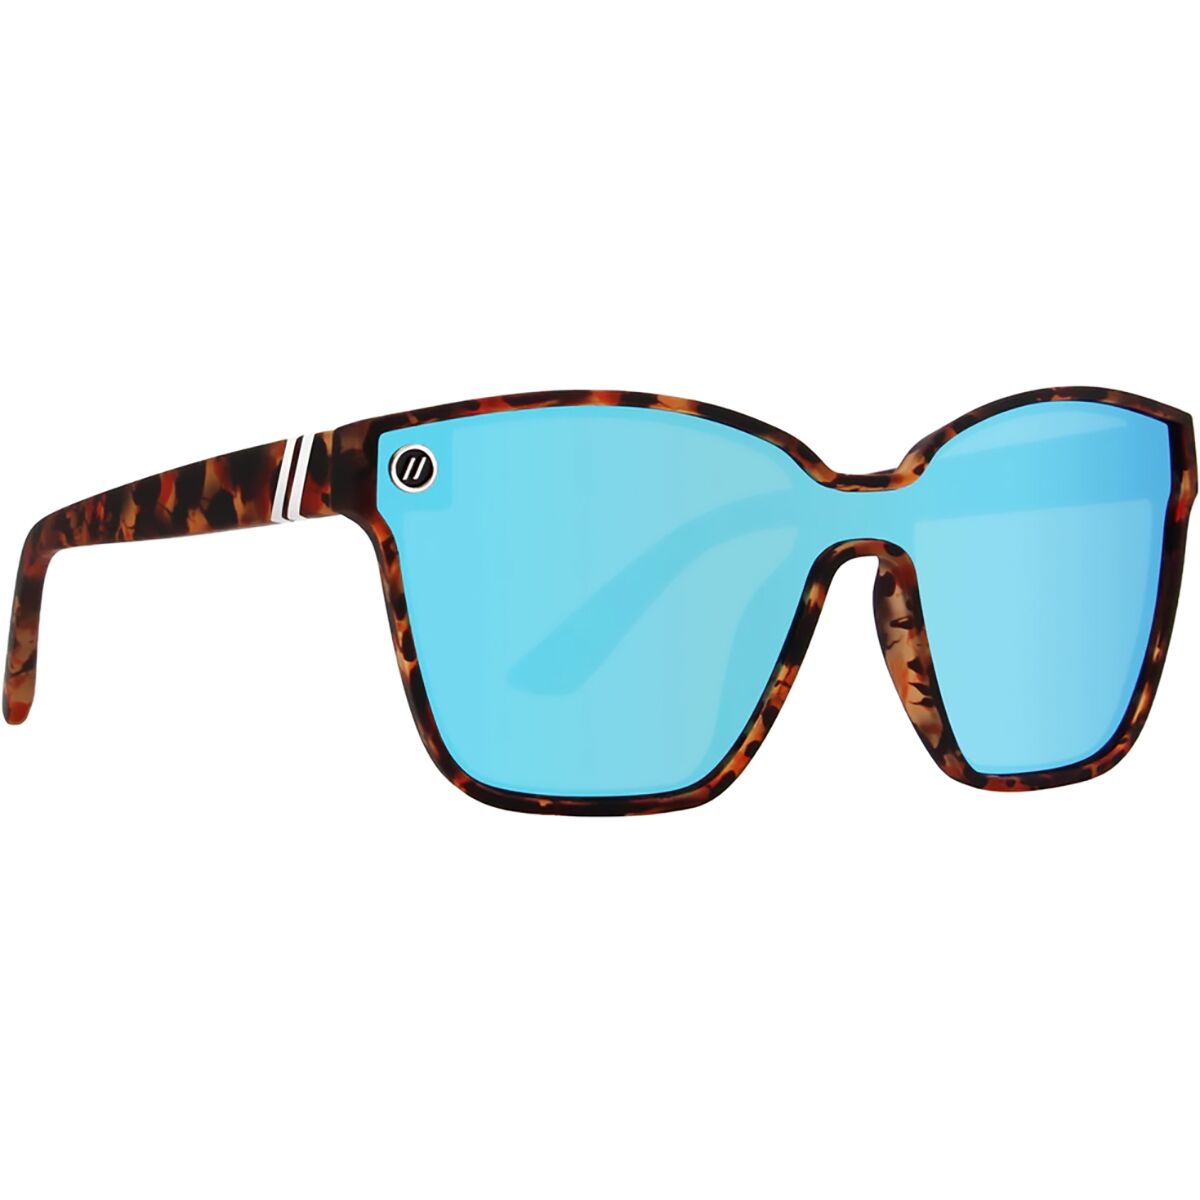 Поляризованные солнцезащитные очки Tiger Beach Buttertron Blenders Eyewear